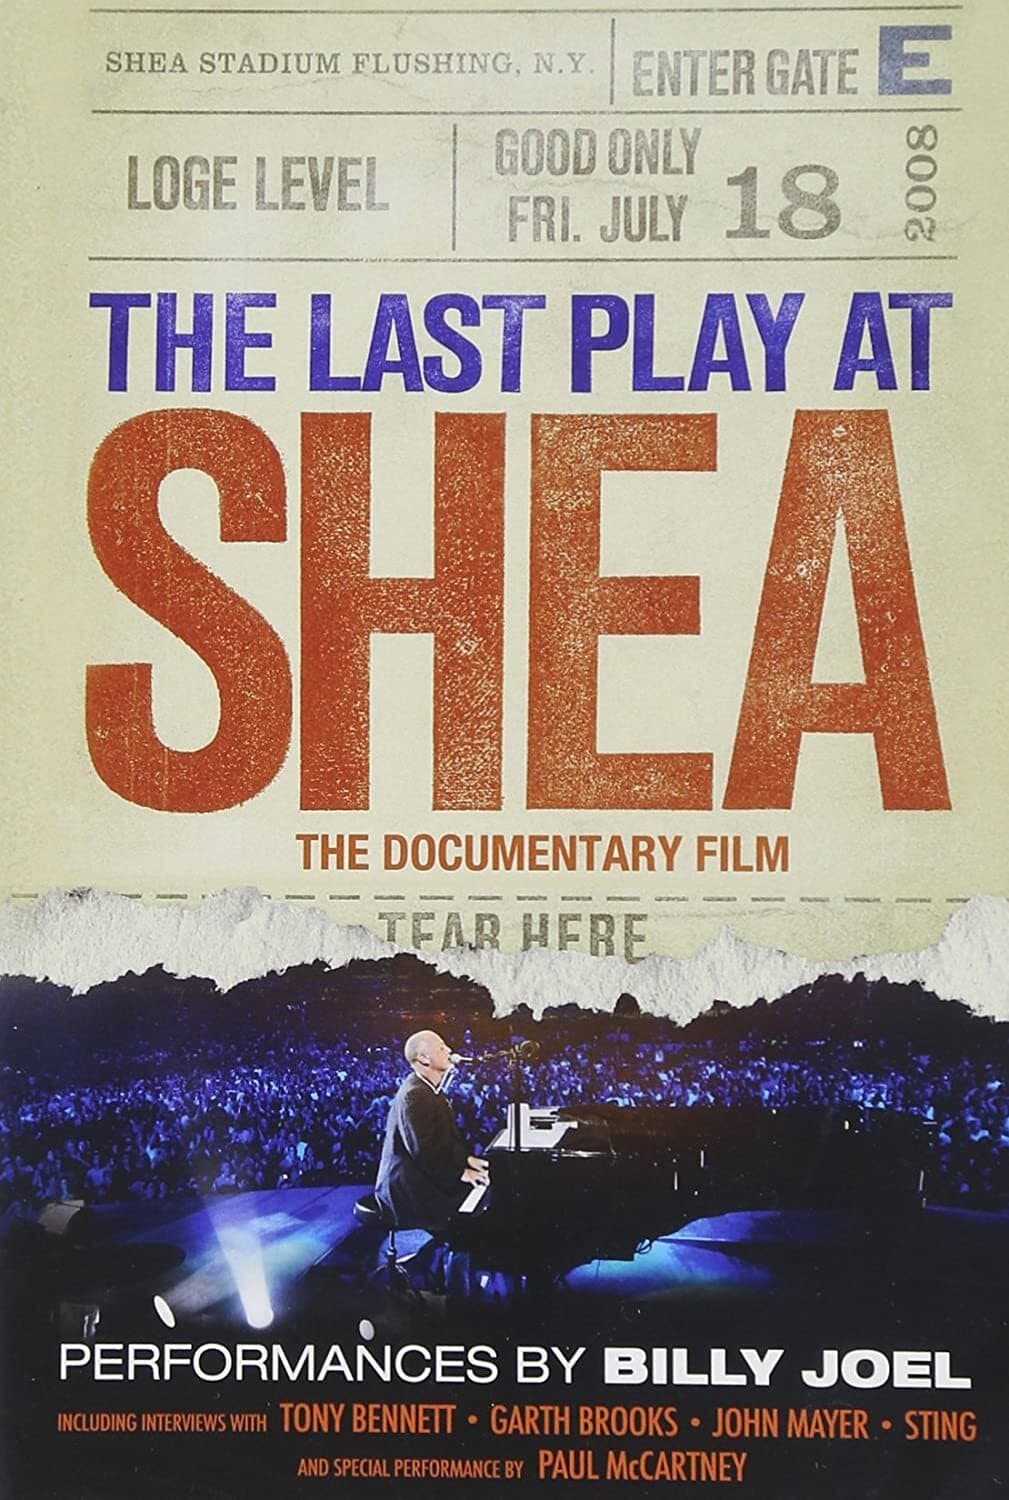 Plakat von "Billy Joel - The Last Play at Shea"